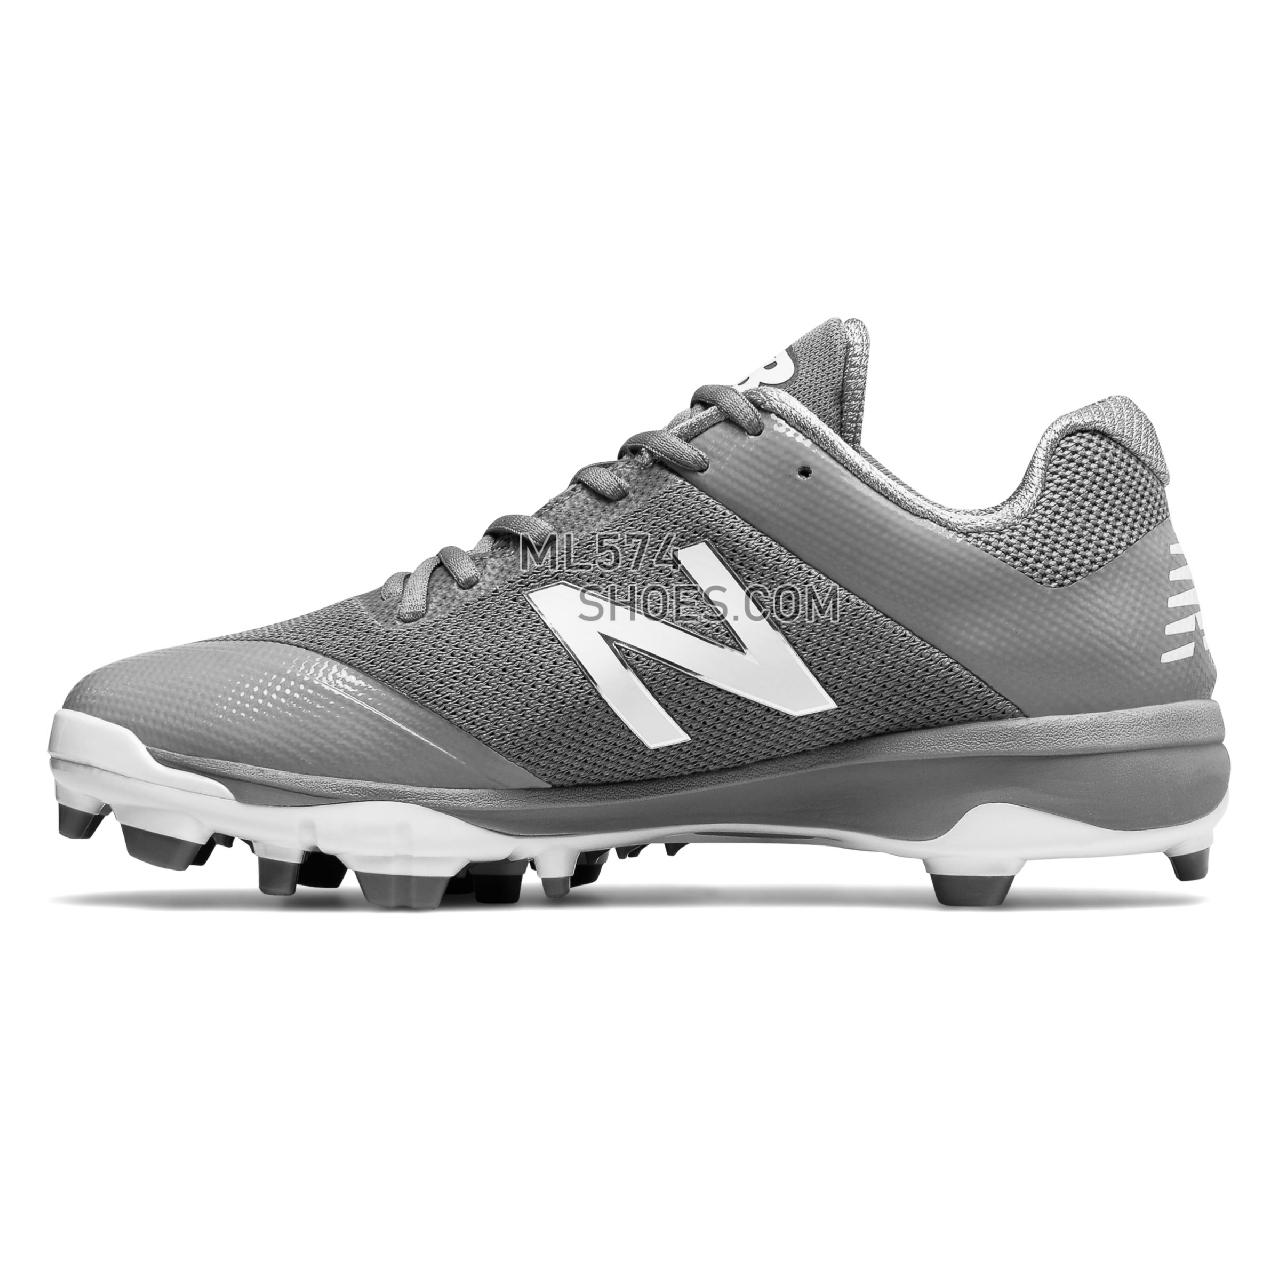 New Balance TPU 4040v4 - Men's 4040 - Baseball Grey - PL4040G4